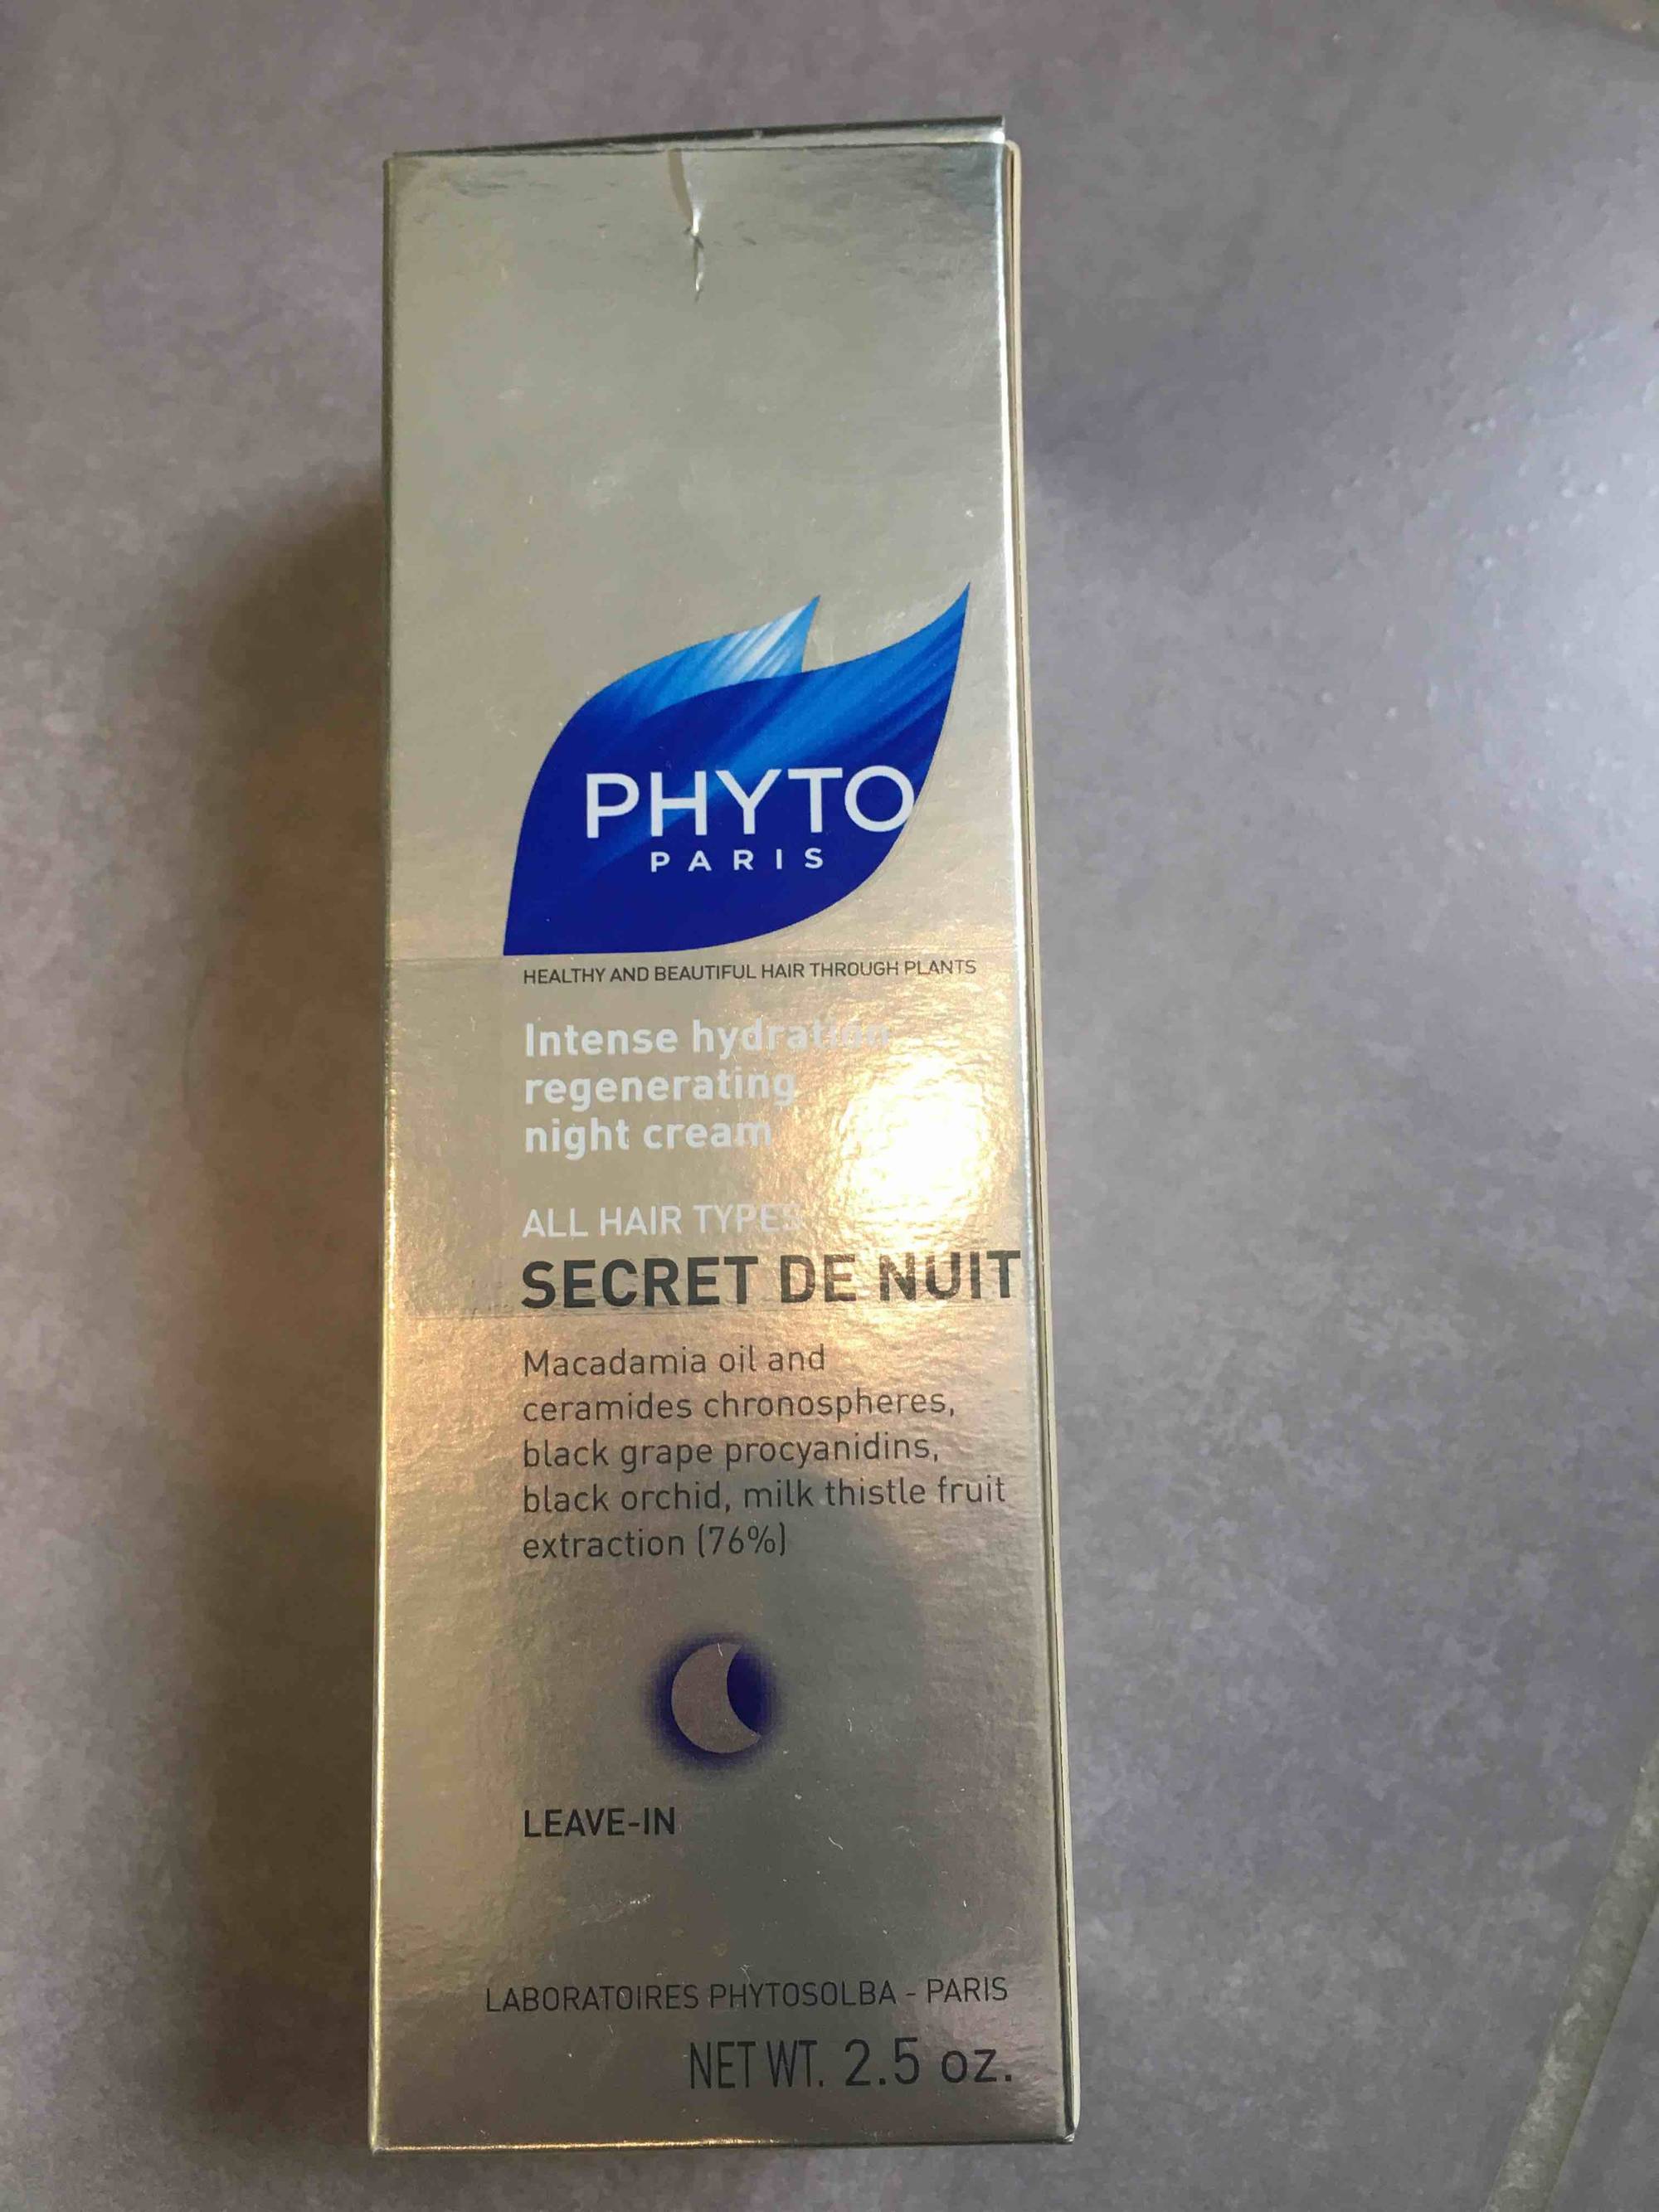 PHYTO PARIS - Secret de nuit - Intense hydration regenerating